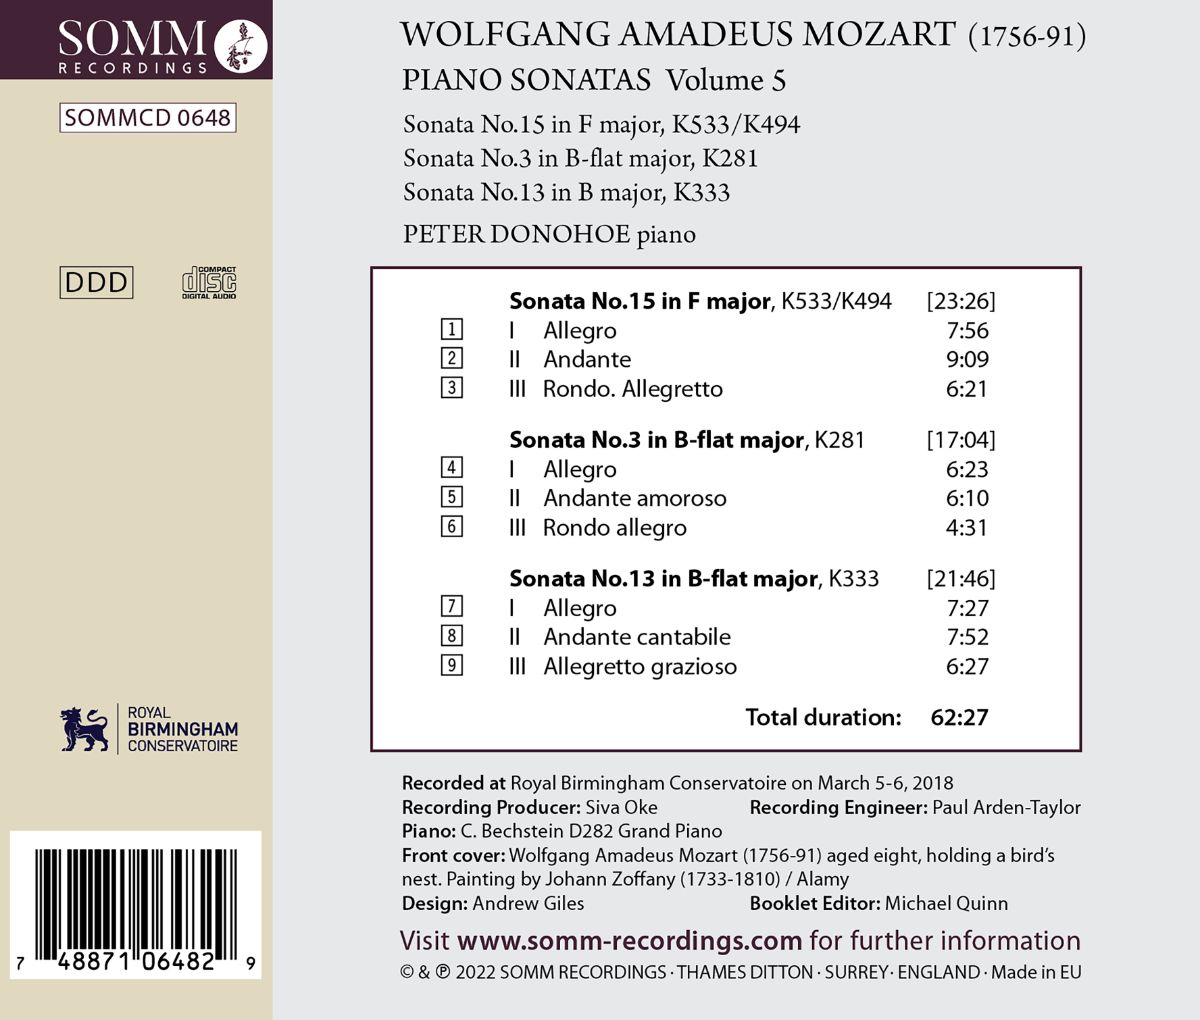 Peter Donohoe 모차르트: 피아노 소나타 5집 - 피터 도노호 (Mozart: Piano Sonatas Vol. 5) 